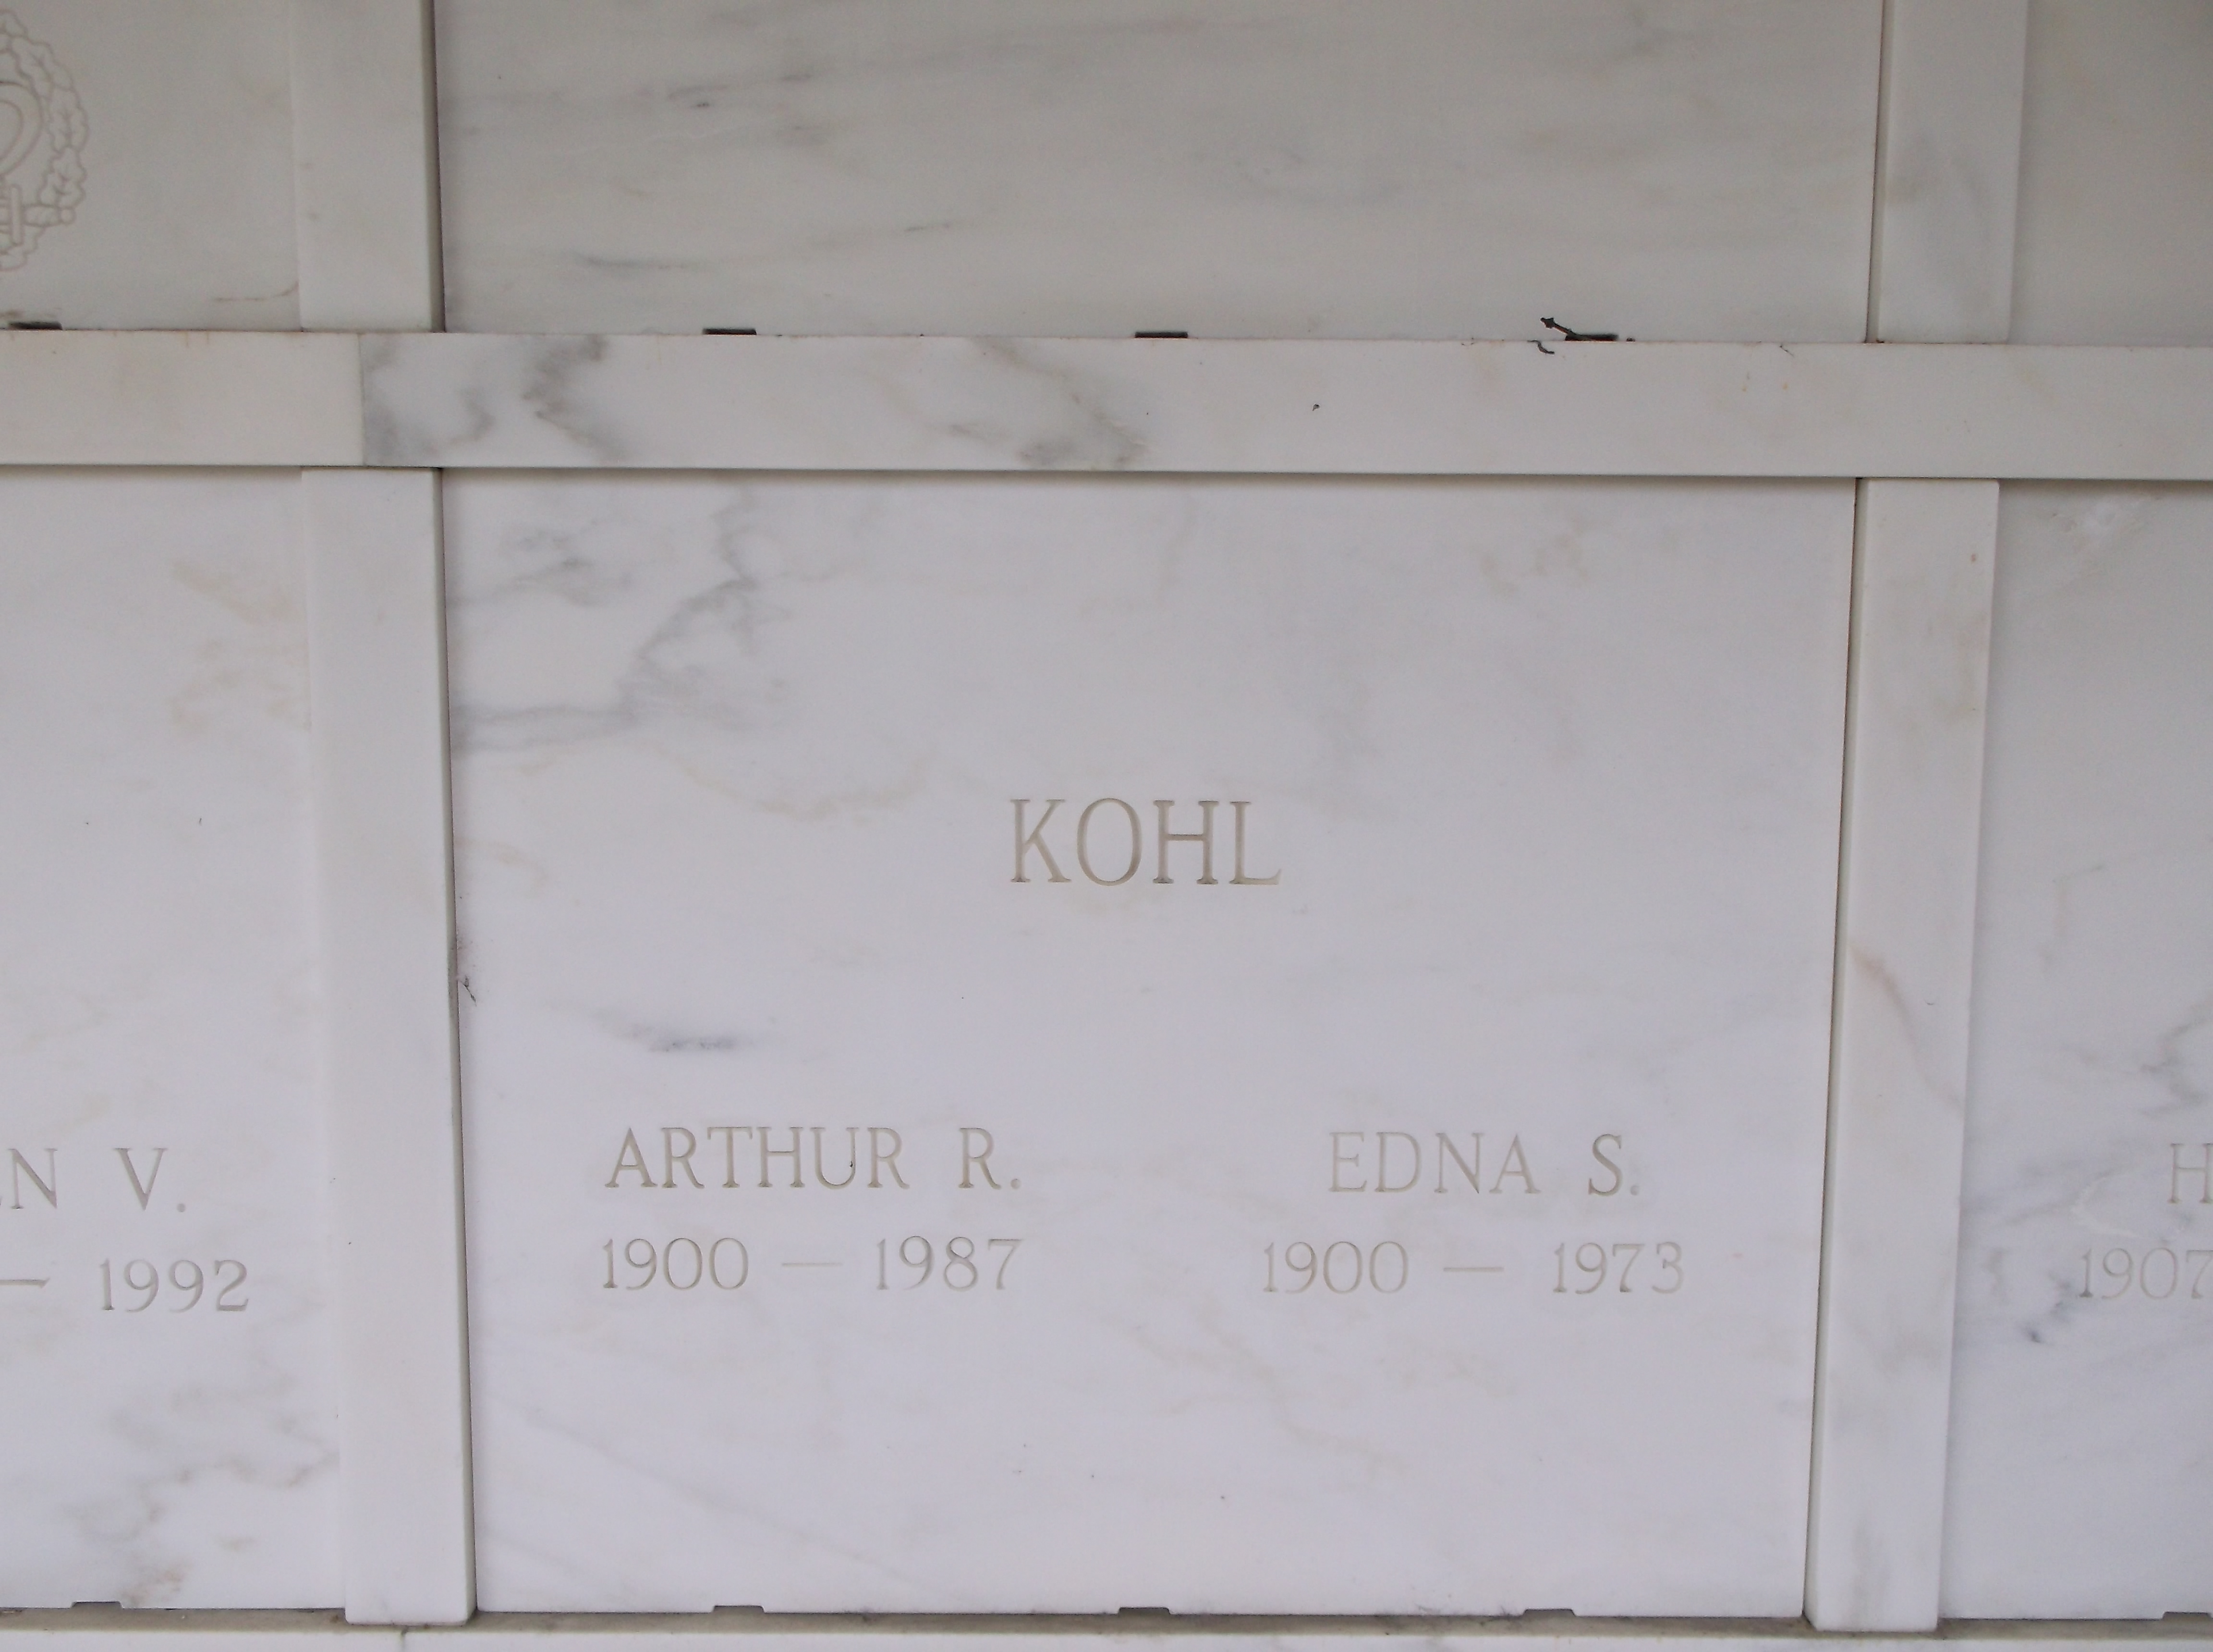 Arthur R Kohl